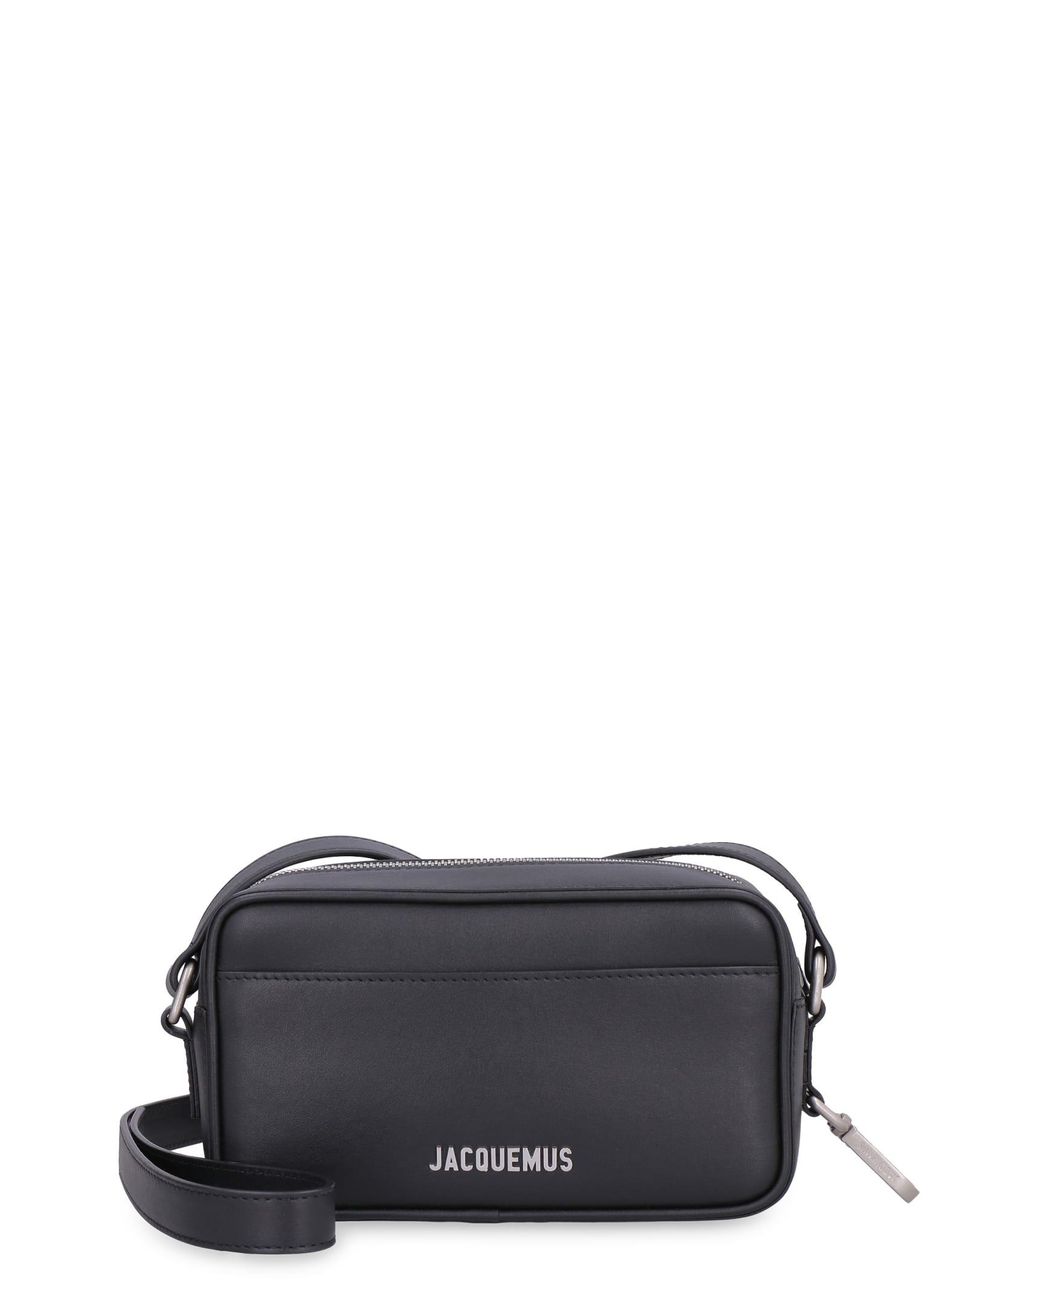 Jacquemus Le Baneto Leather Messenger Bag in Black for Men | Lyst